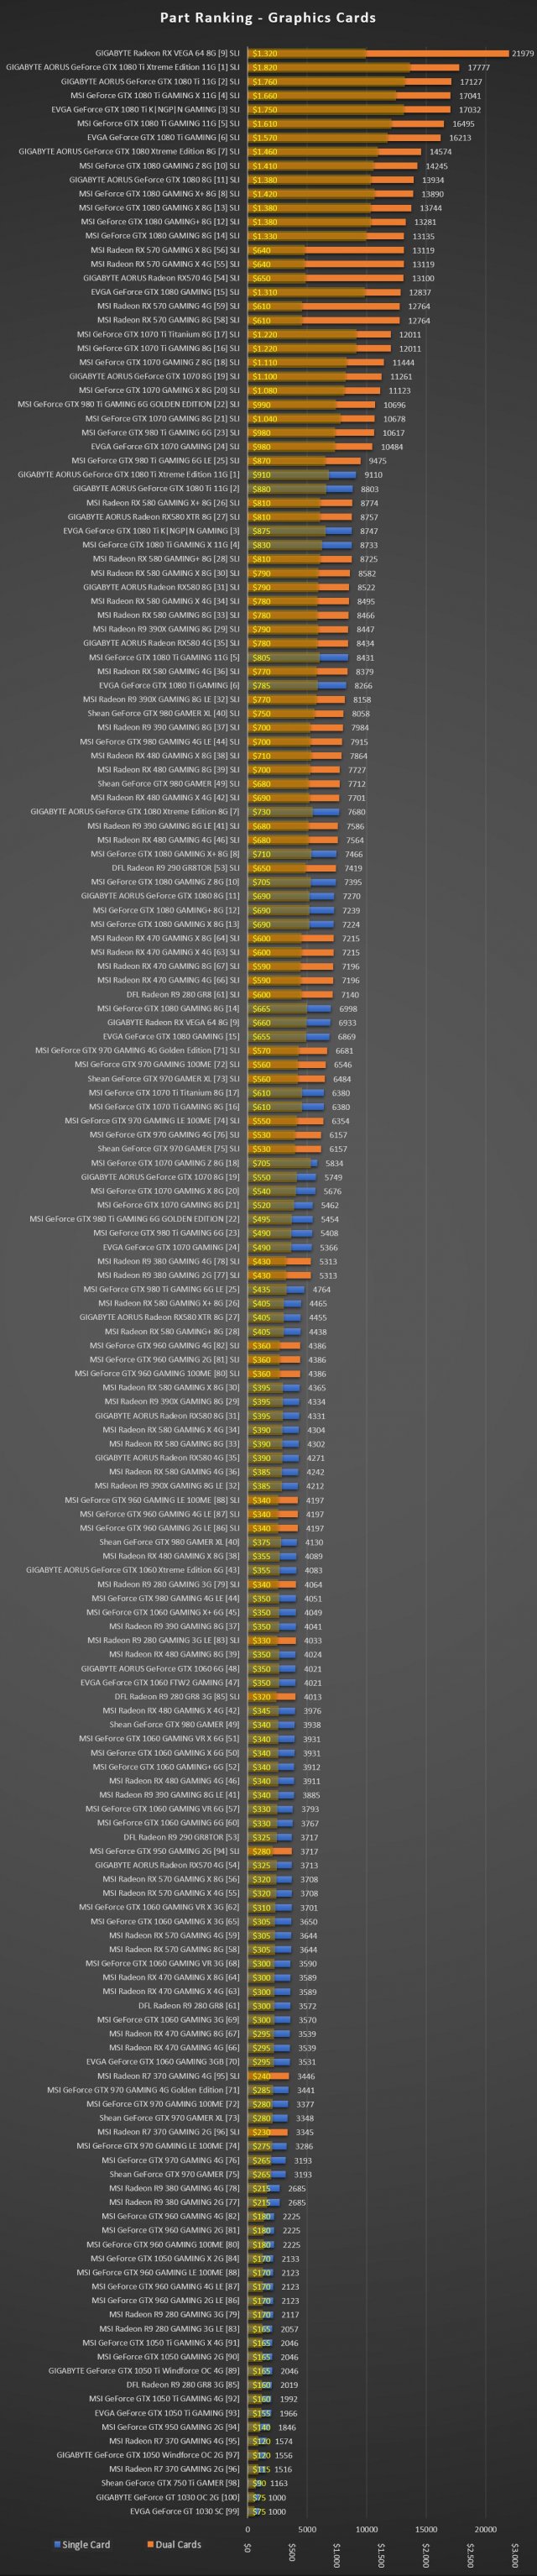 PC Building Simulator - Part Ranking Graphs